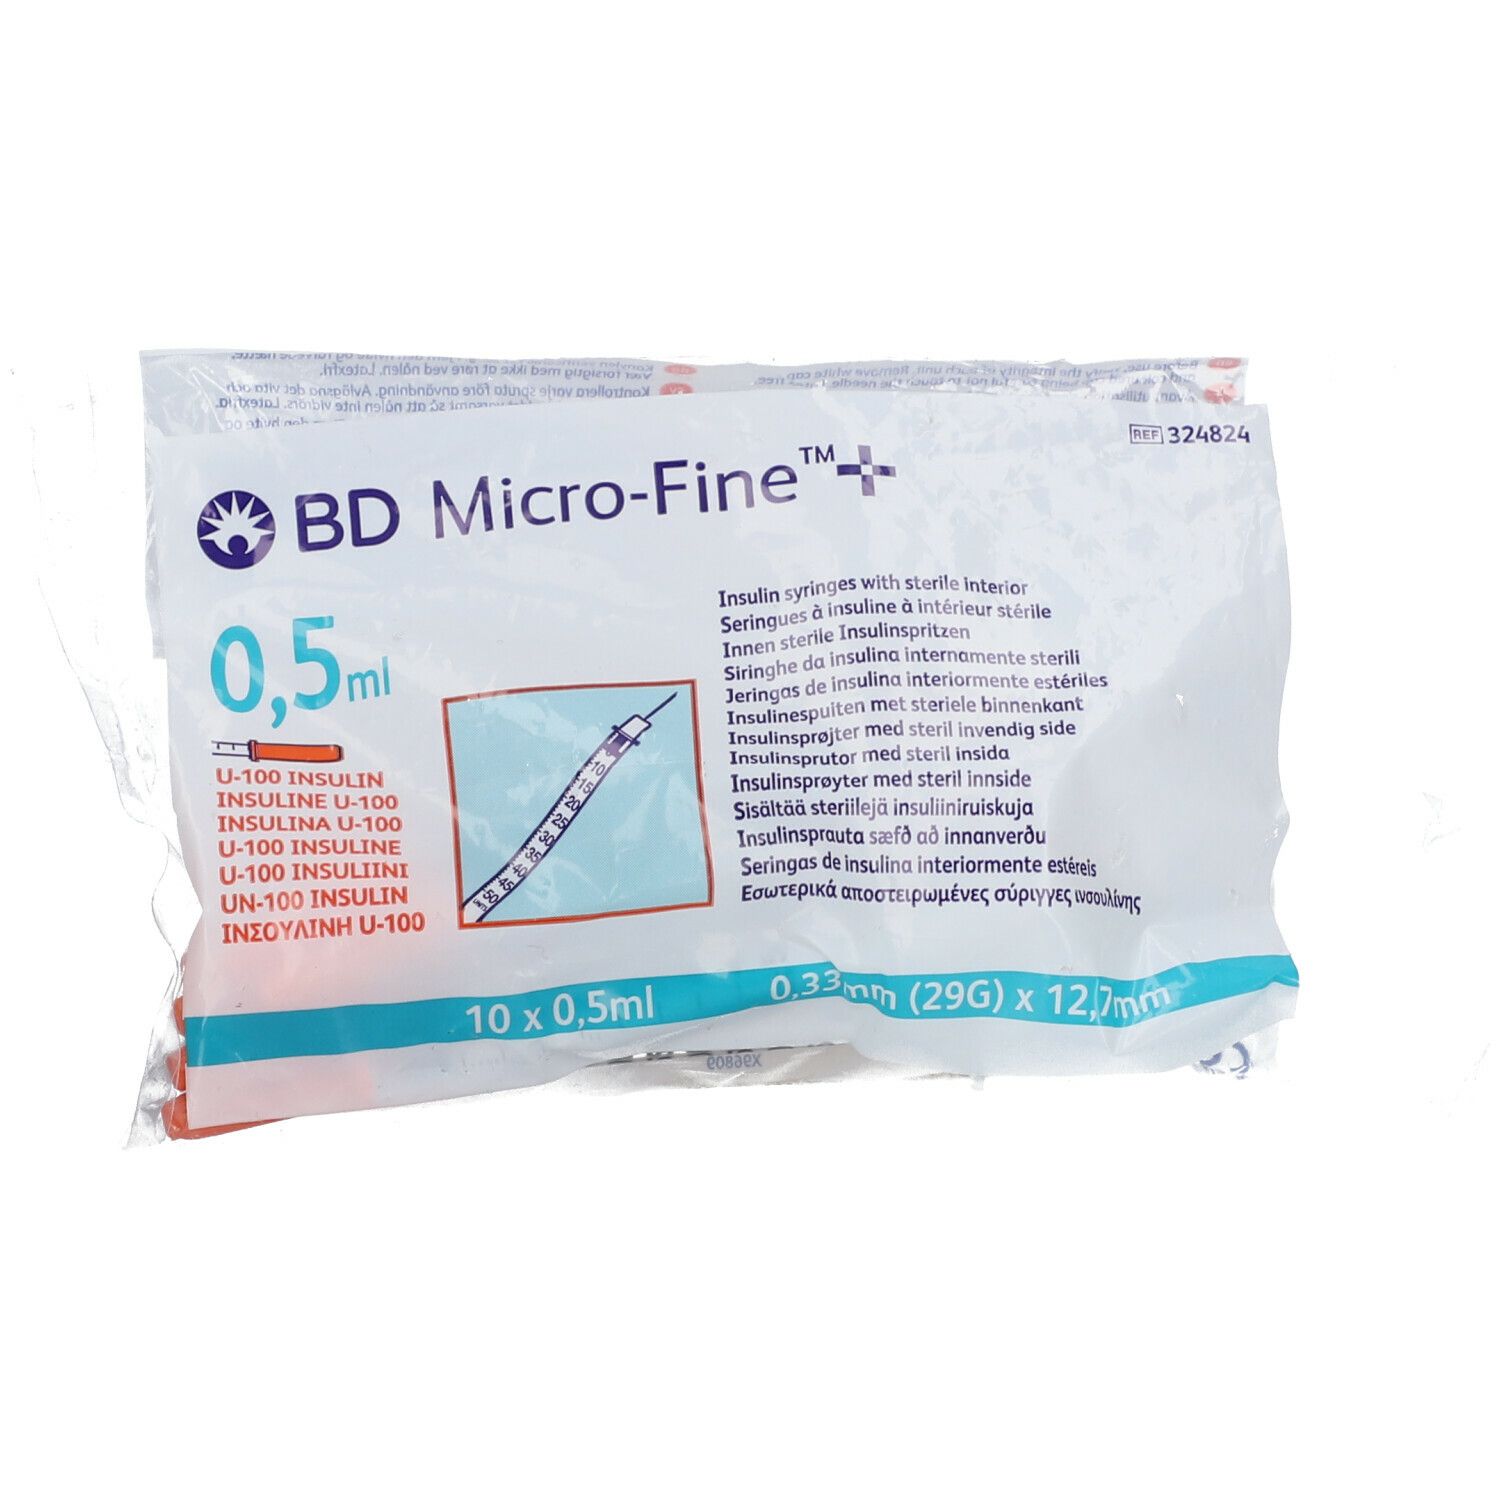 Image of BD Micro-Fine™ 29 G 033 x 127 mm 05 ml + U-100 Insulin Innen sterile Insulinspritze